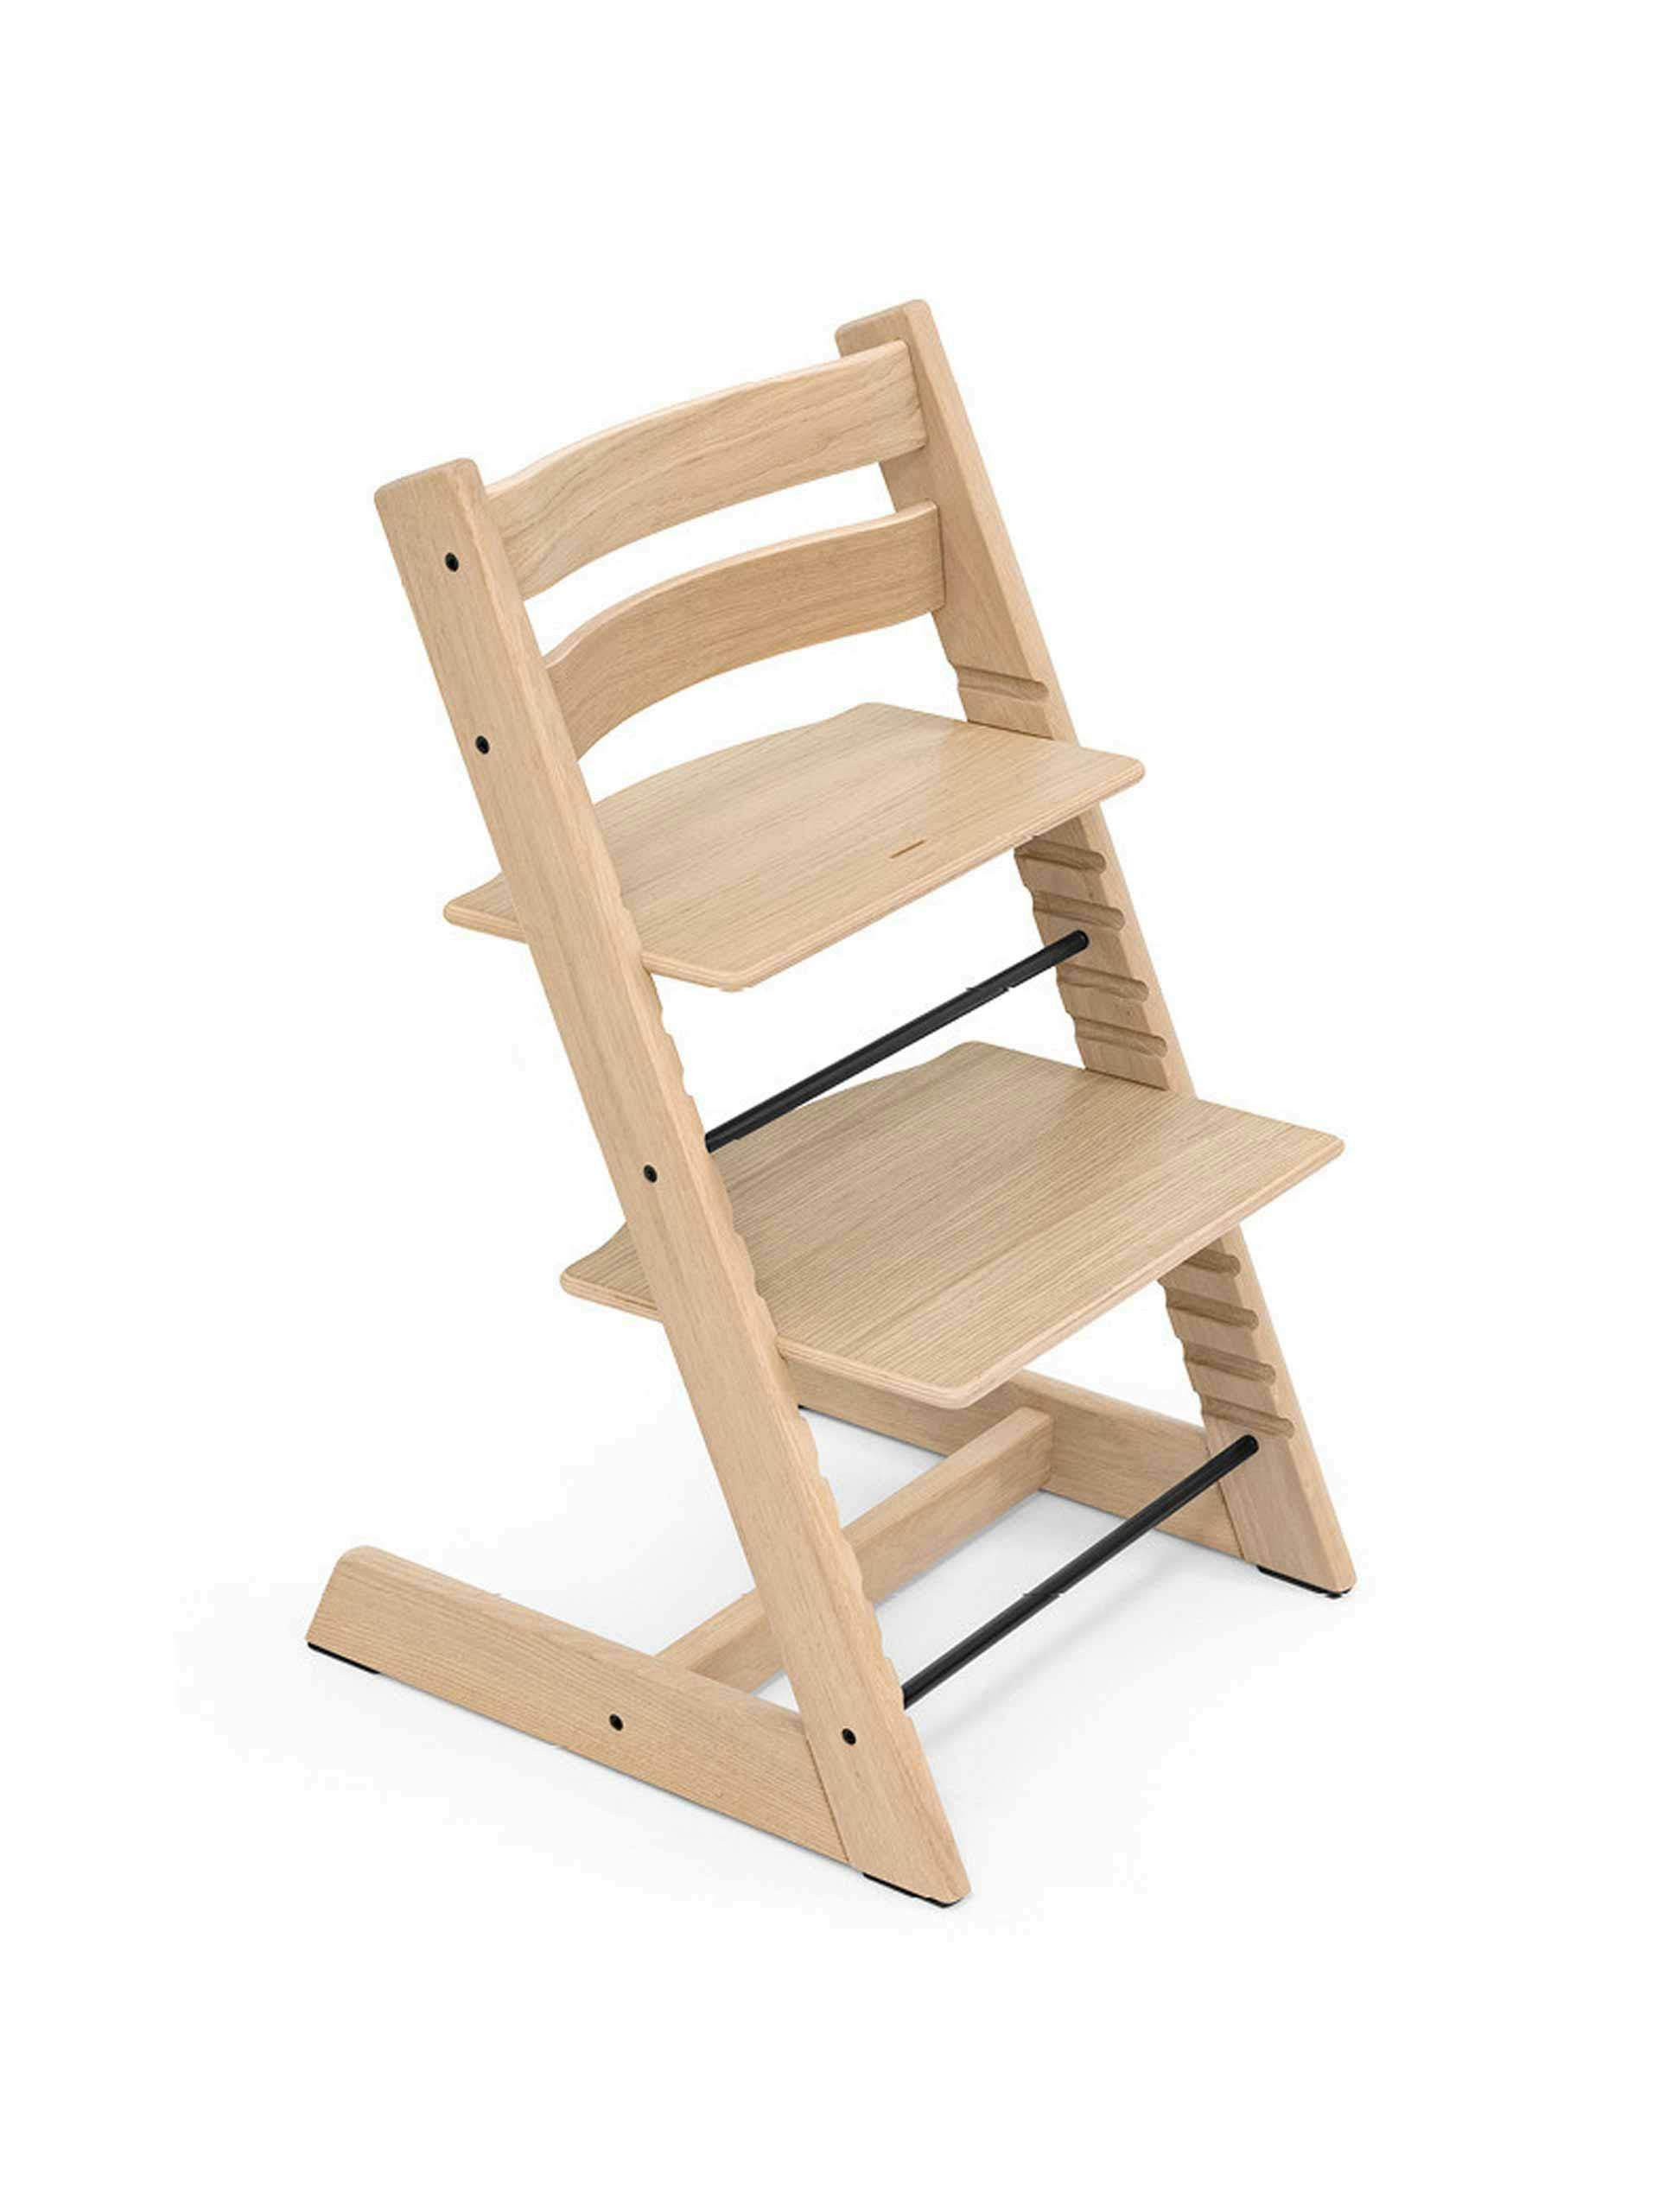 Tripp Trapp wooden high chair